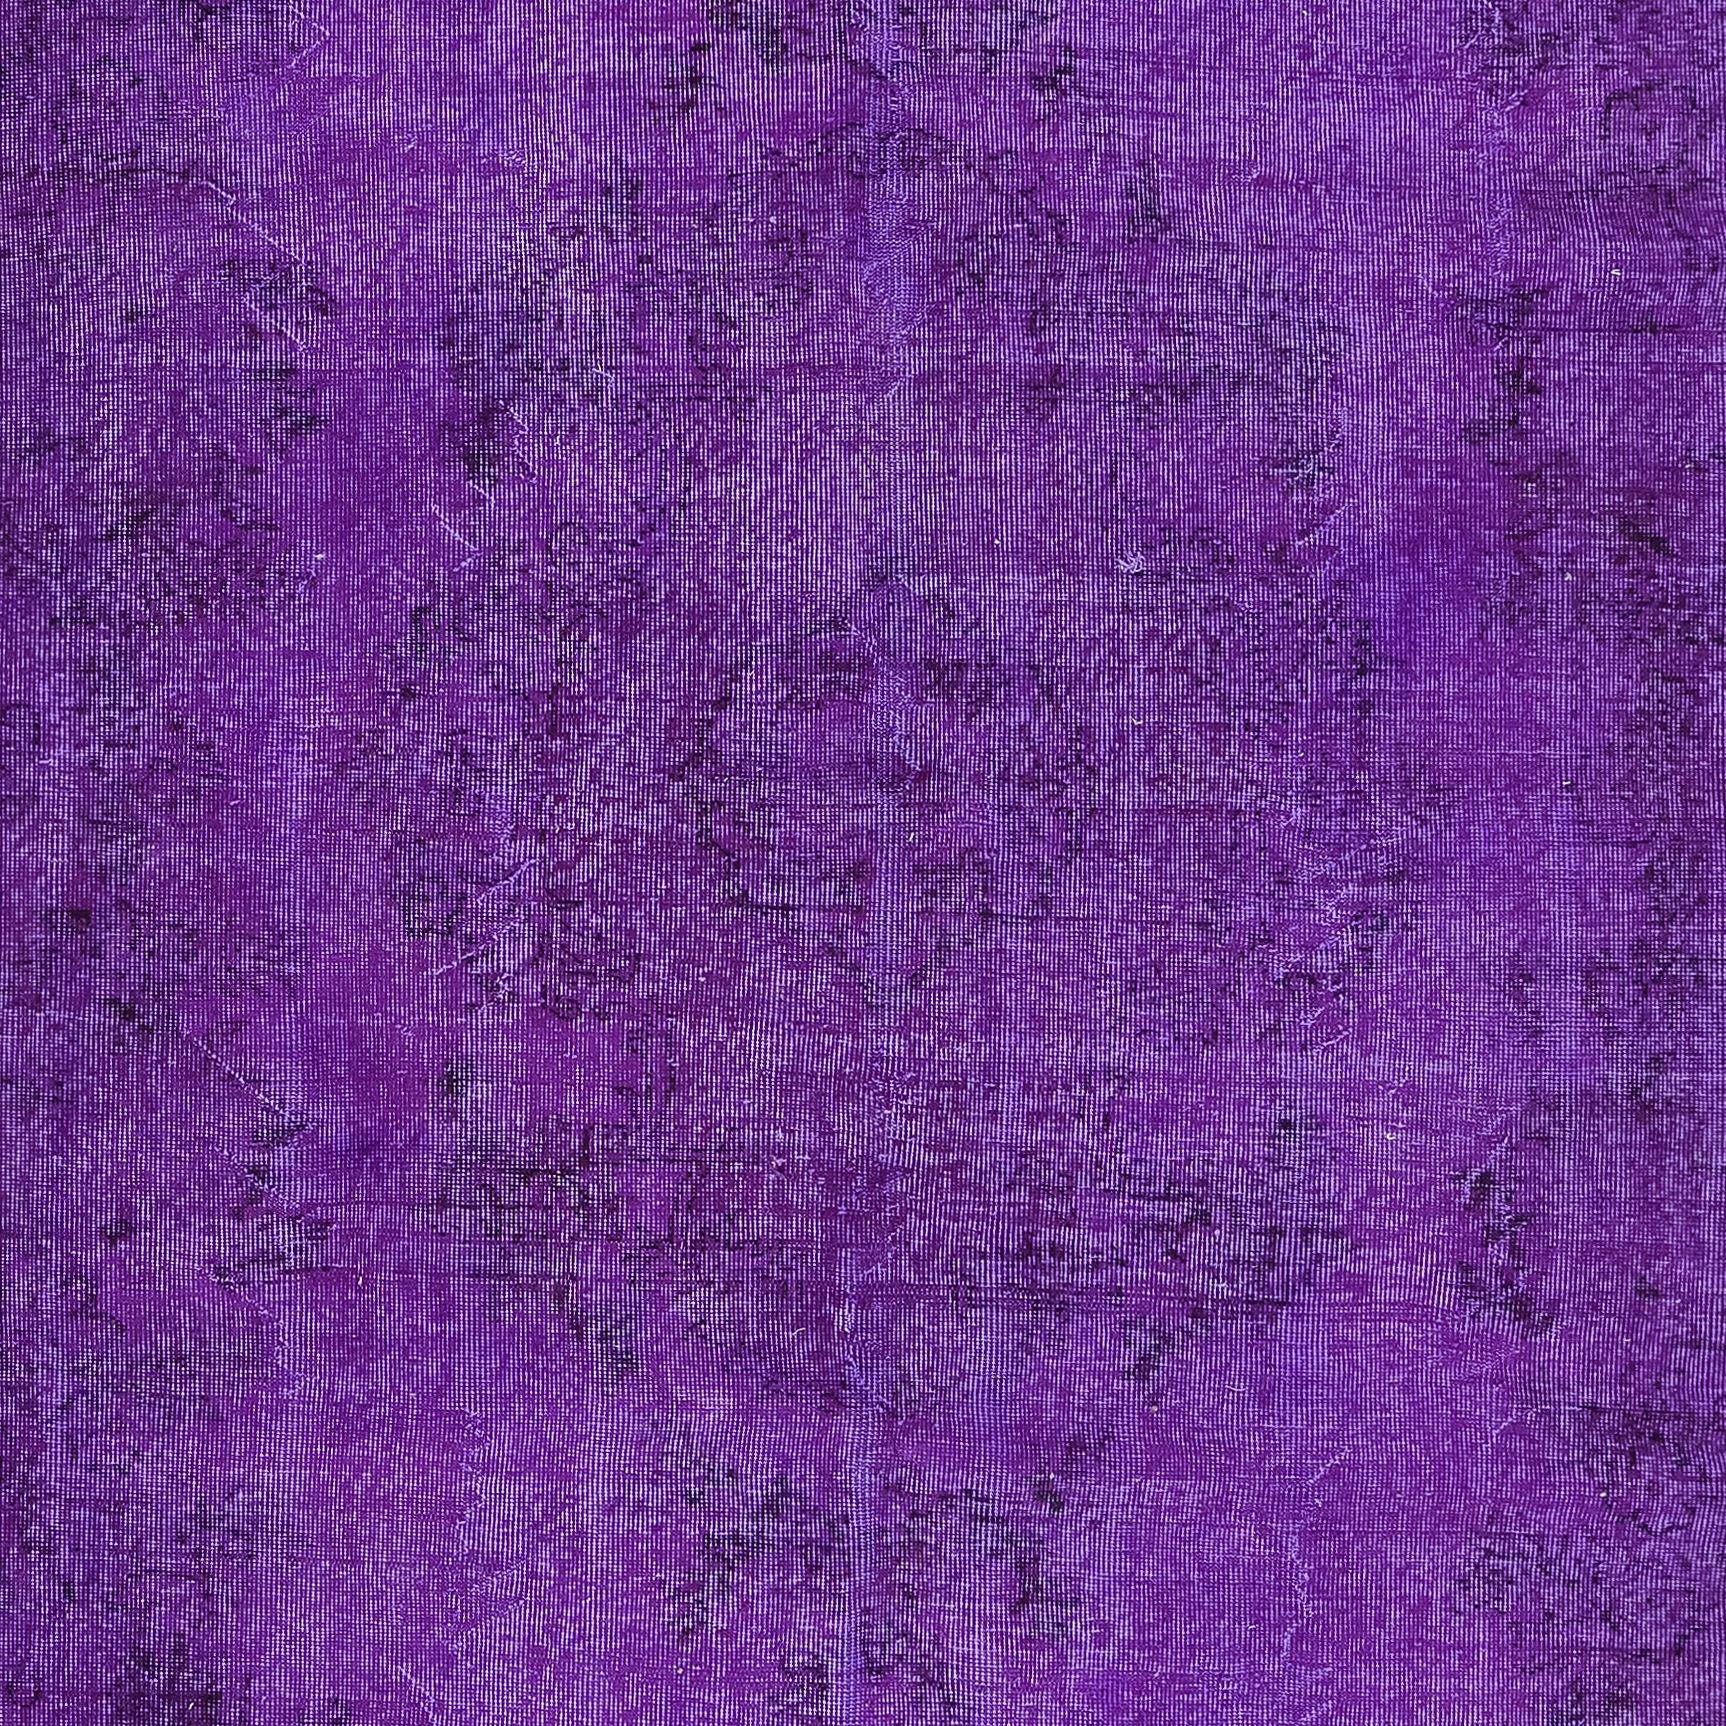 Hand-Knotted 6.7x10 Ft Handmade Turkish Rug, Modern Violet Purple Carpet, Bohemian Home Decor For Sale